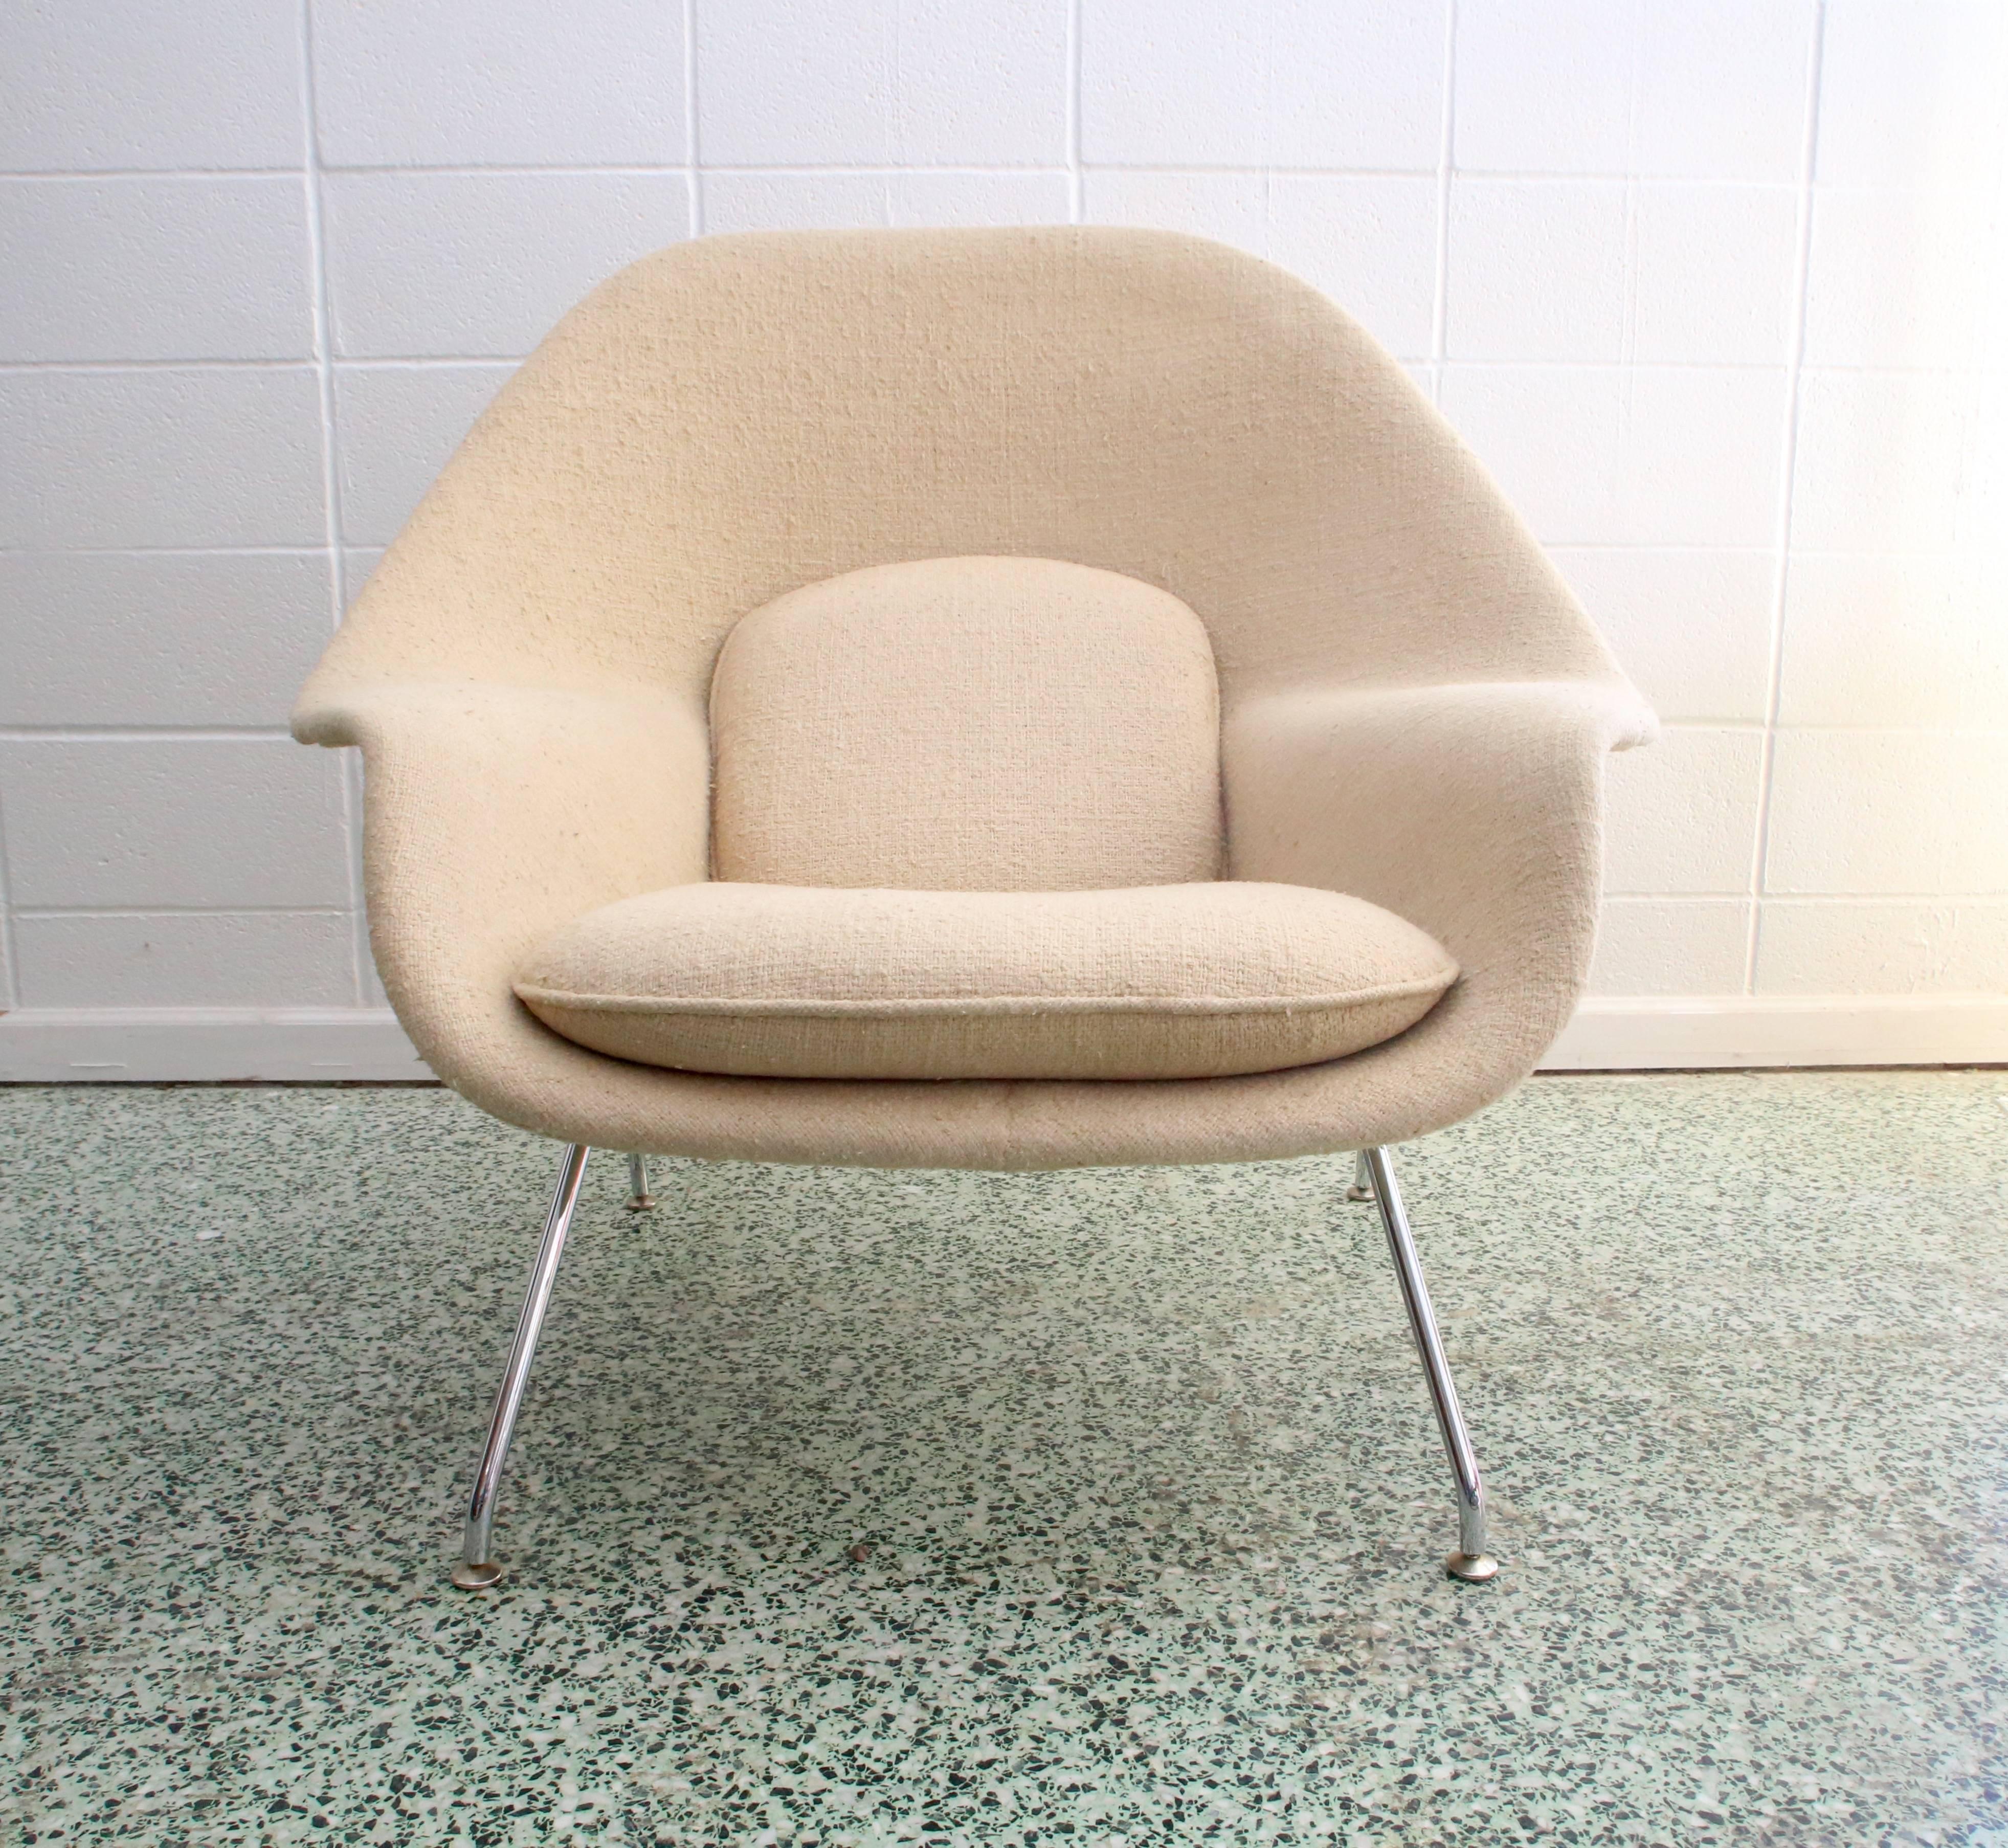 20th Century 1979 Womb Chair & Ottoman by Eero Saarinen for Knoll Original Fabric